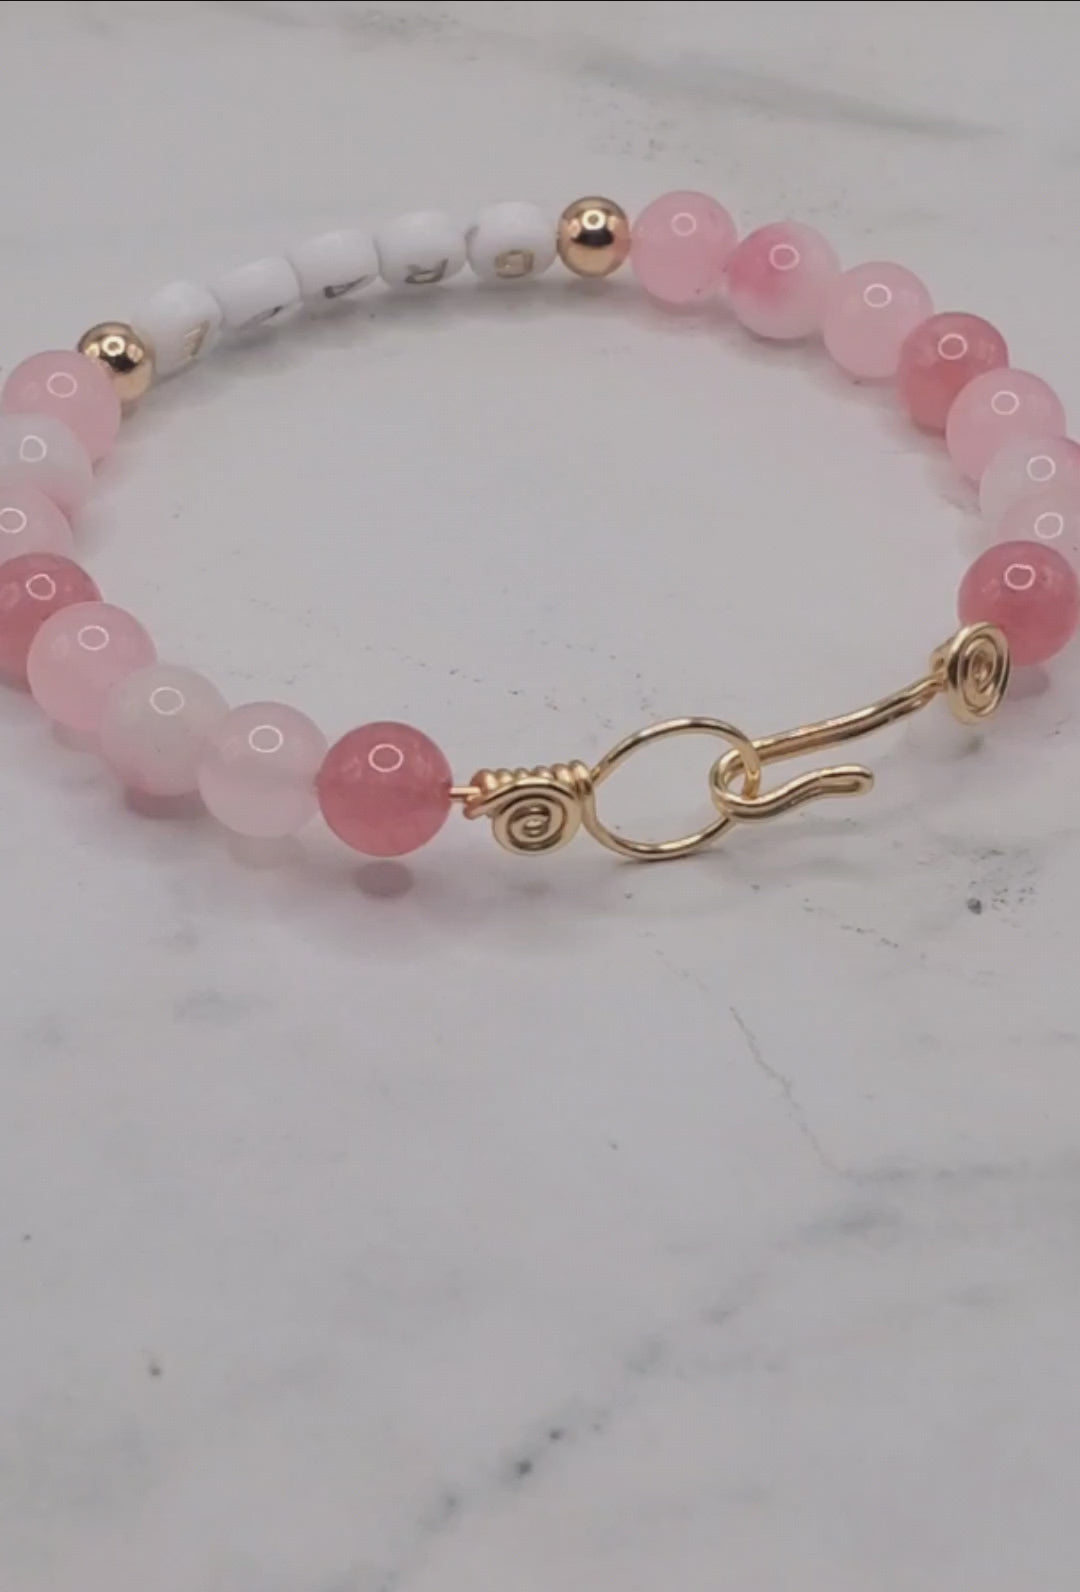 Grace beaded word bracelet | Gemstone bangle bracelet video | Braceliss